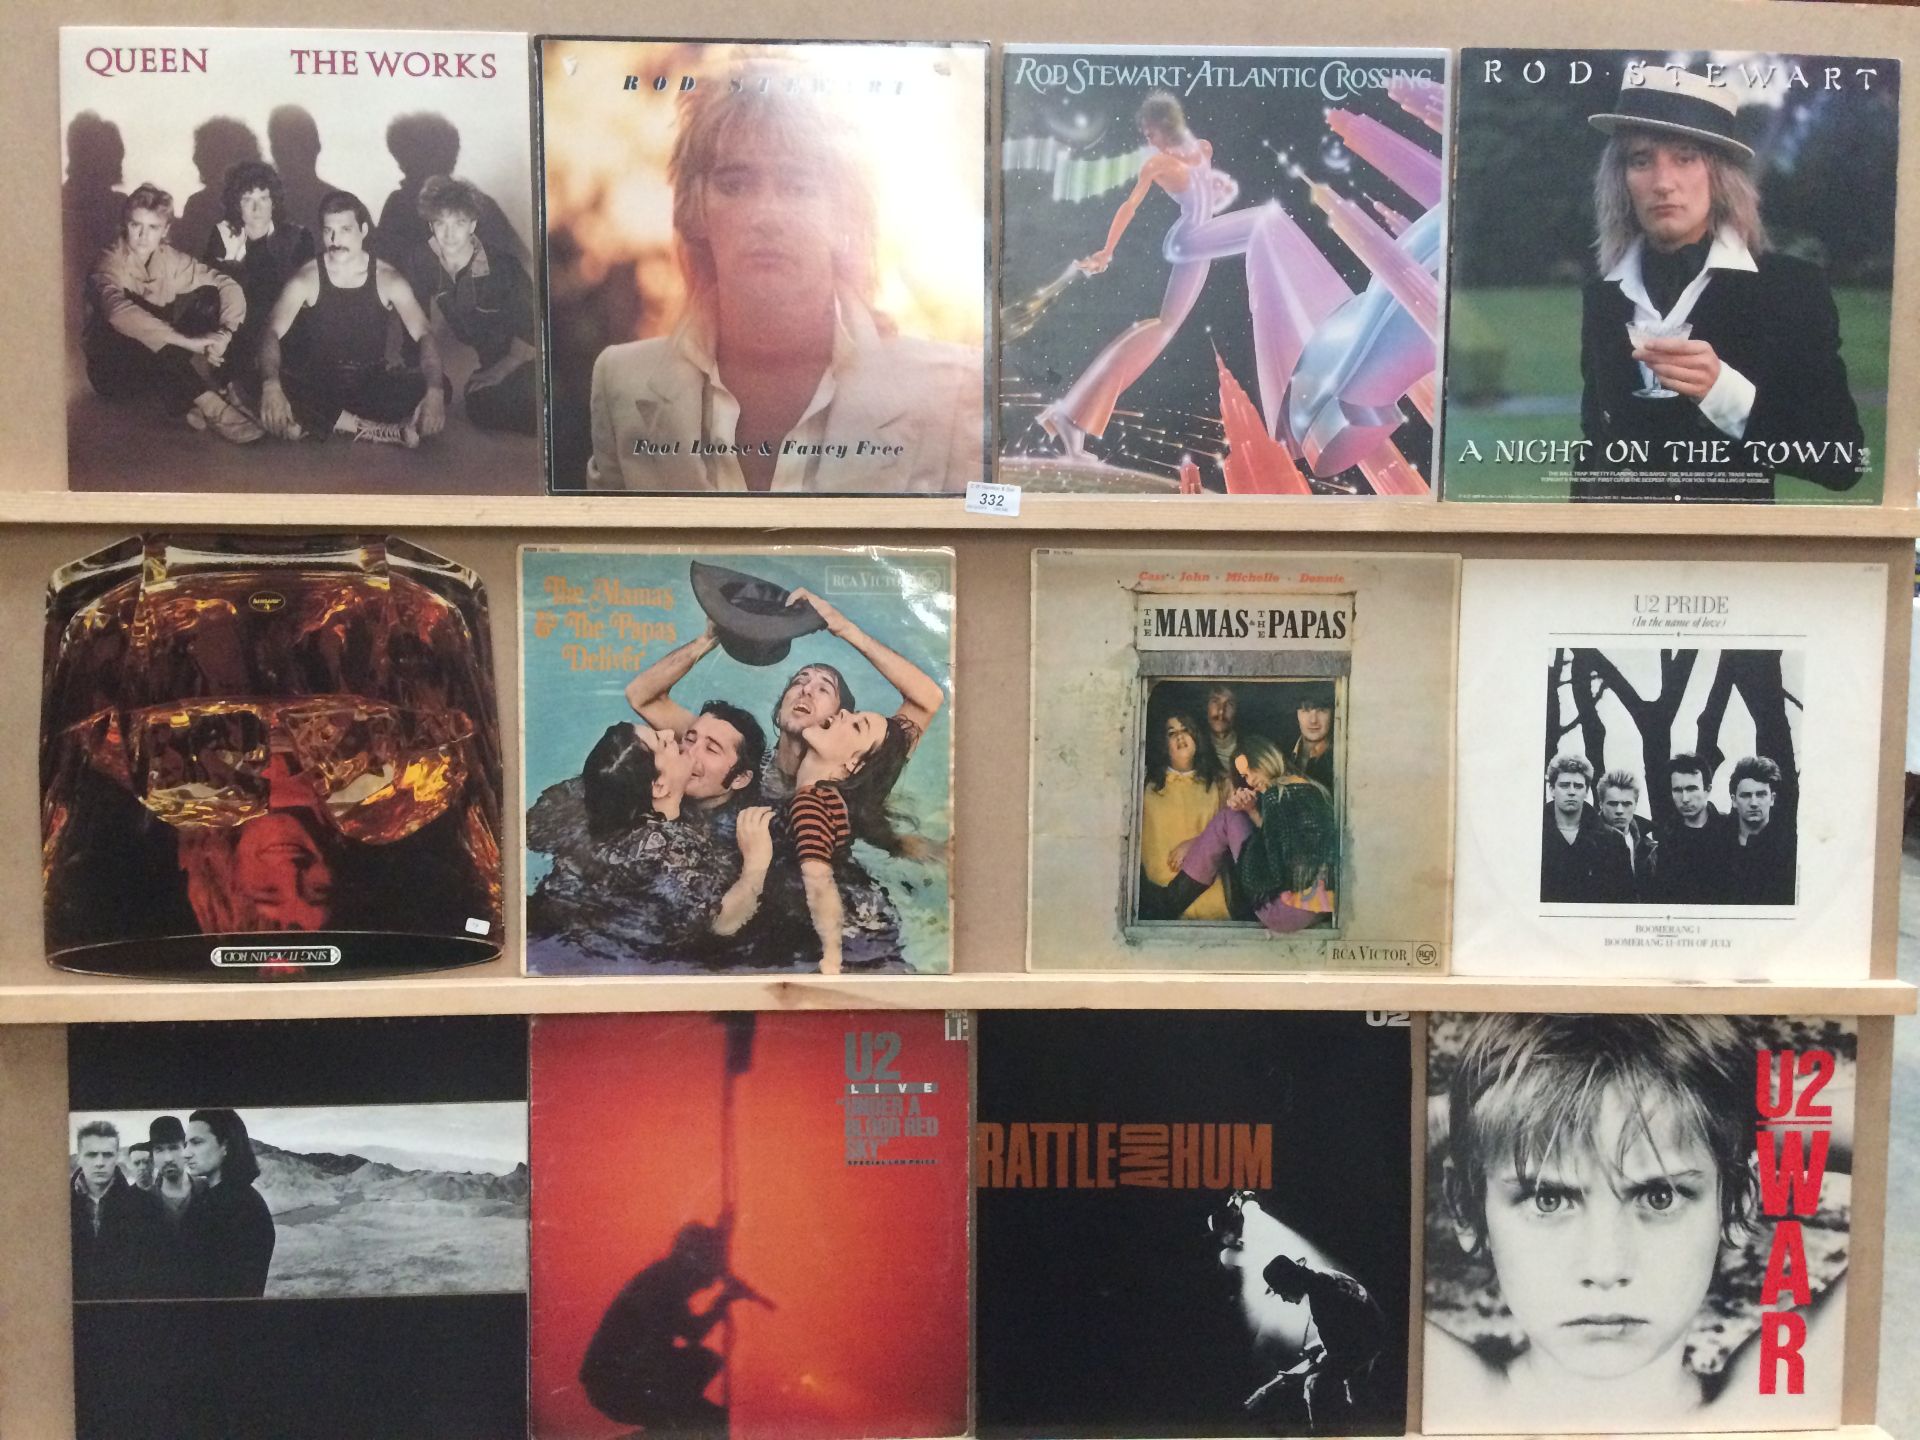 12 x 12" vinyl records - Queen, Mamas and Papas, U2, etc.